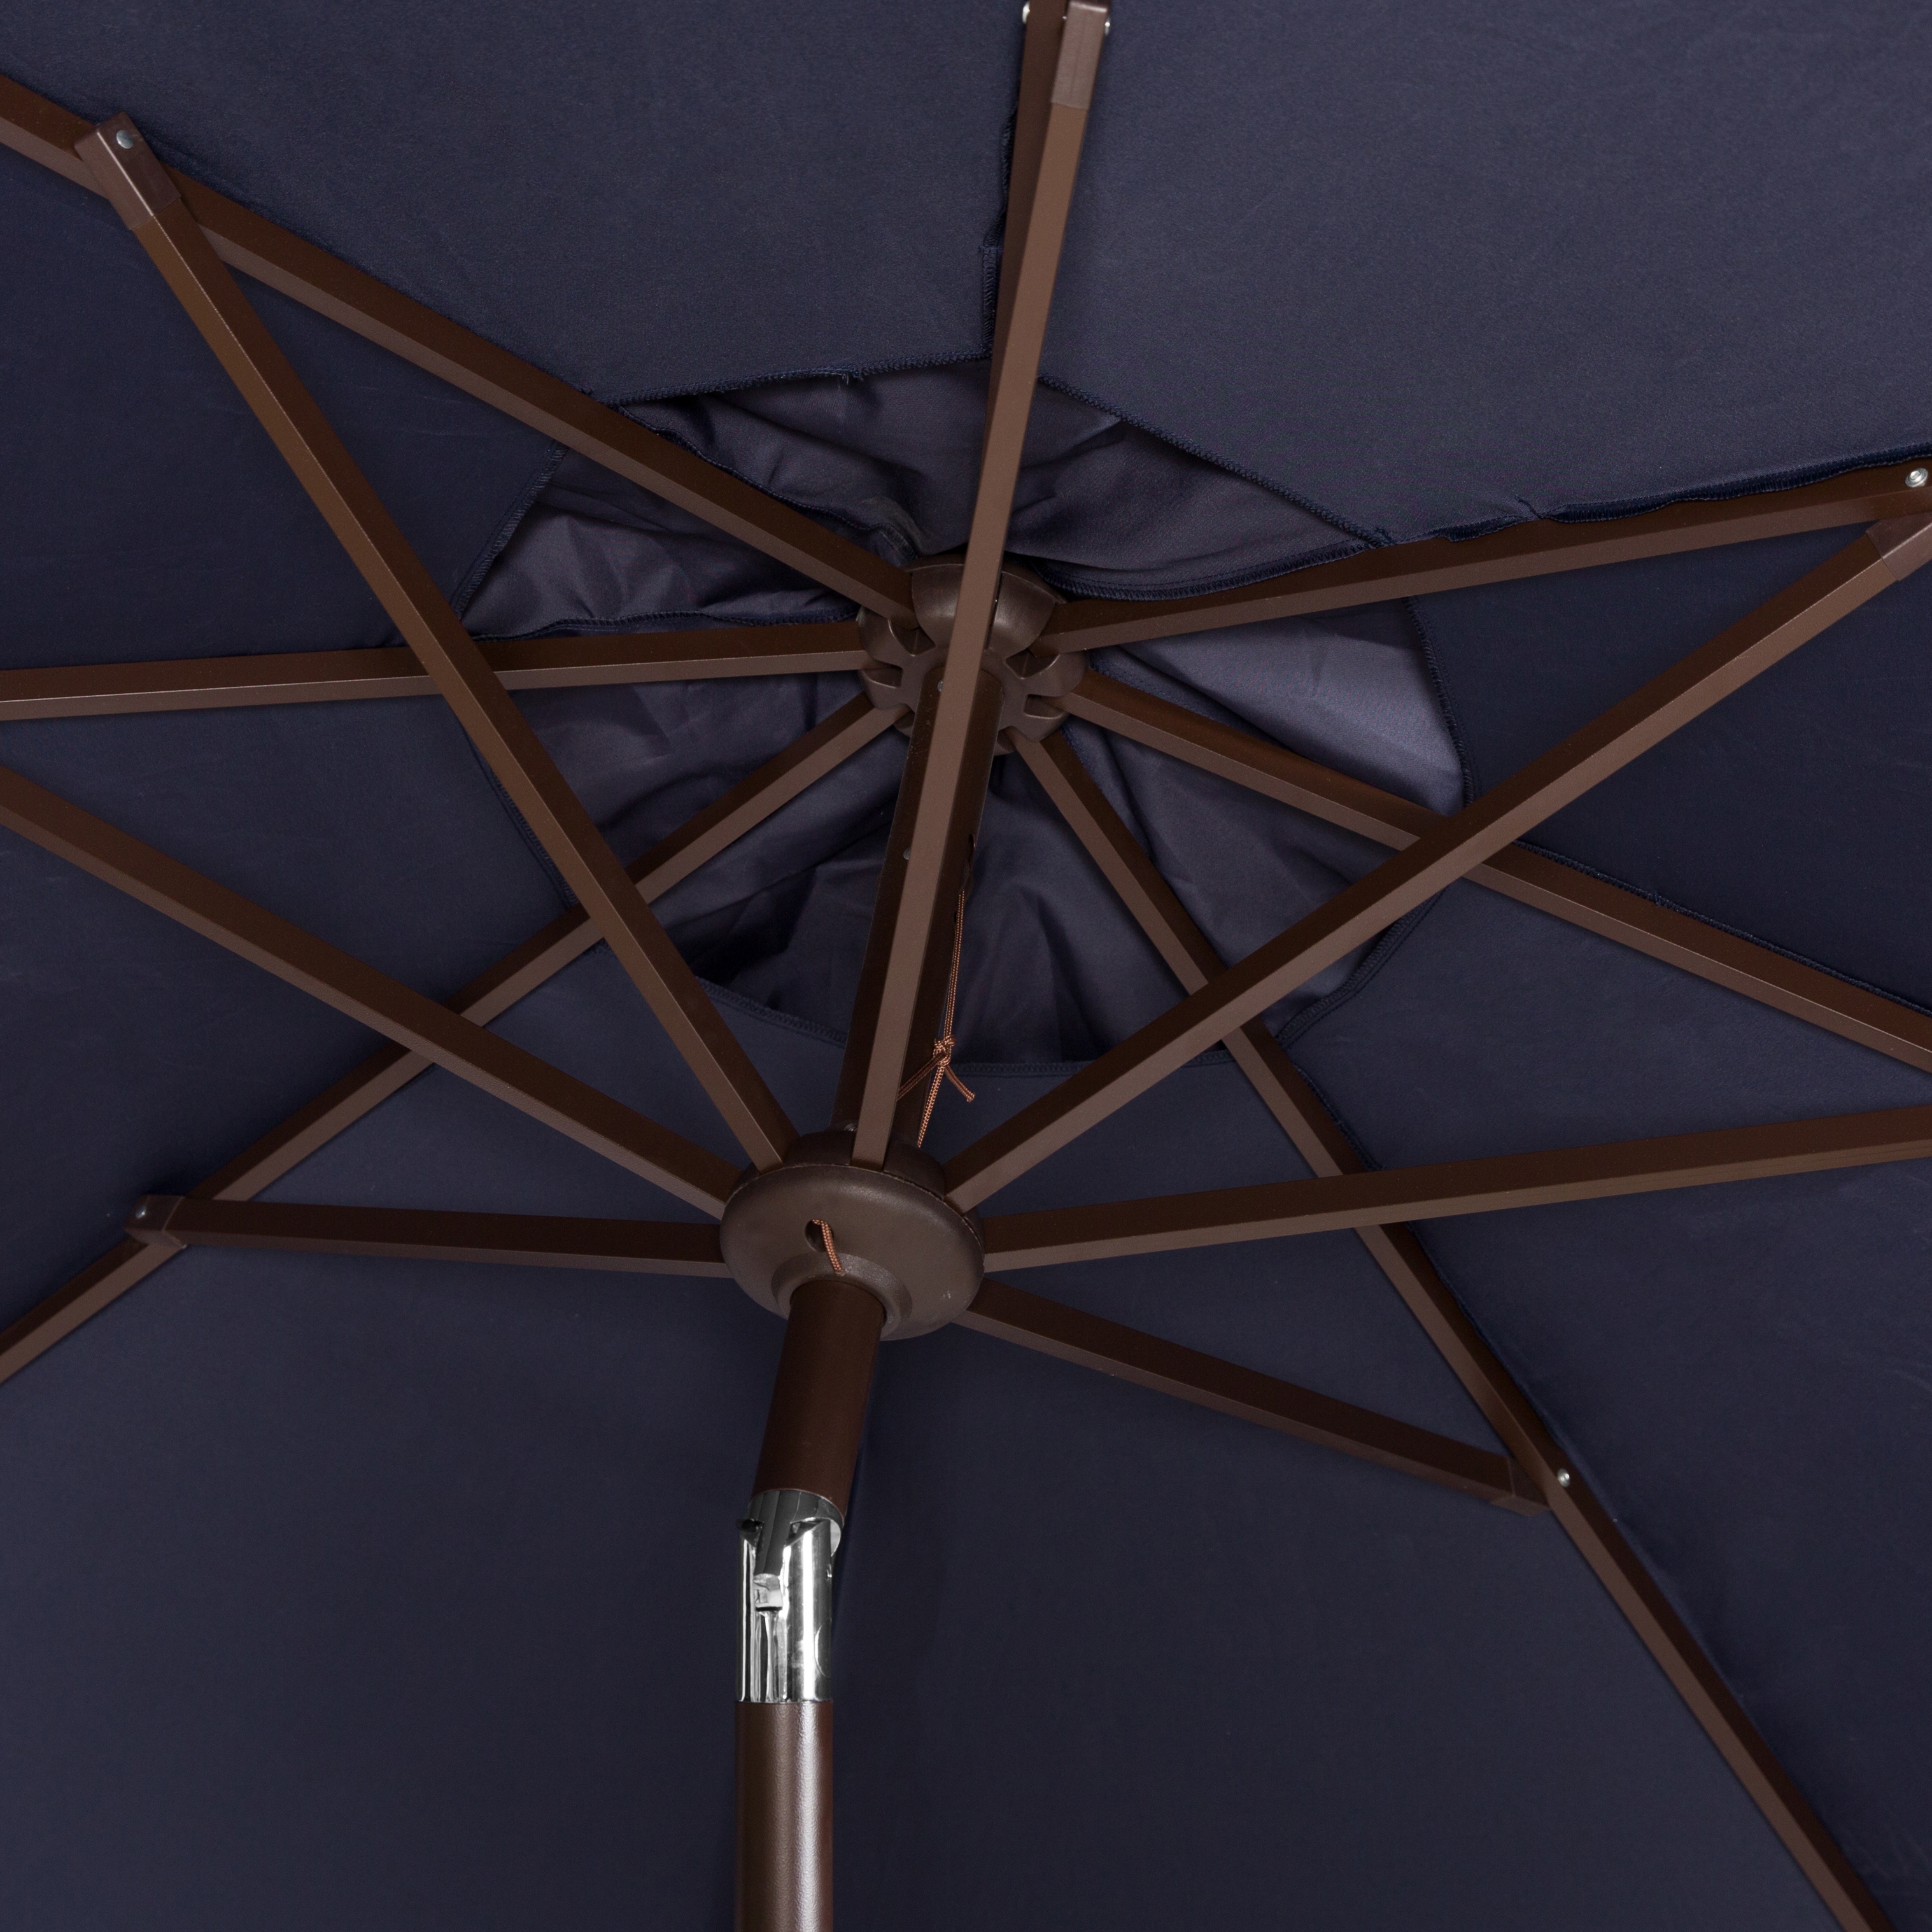 Milan Fringe 9Ft Crank Outdoor Push Button Tilt Umbrella - Navy/White - Arlo Home - Image 2